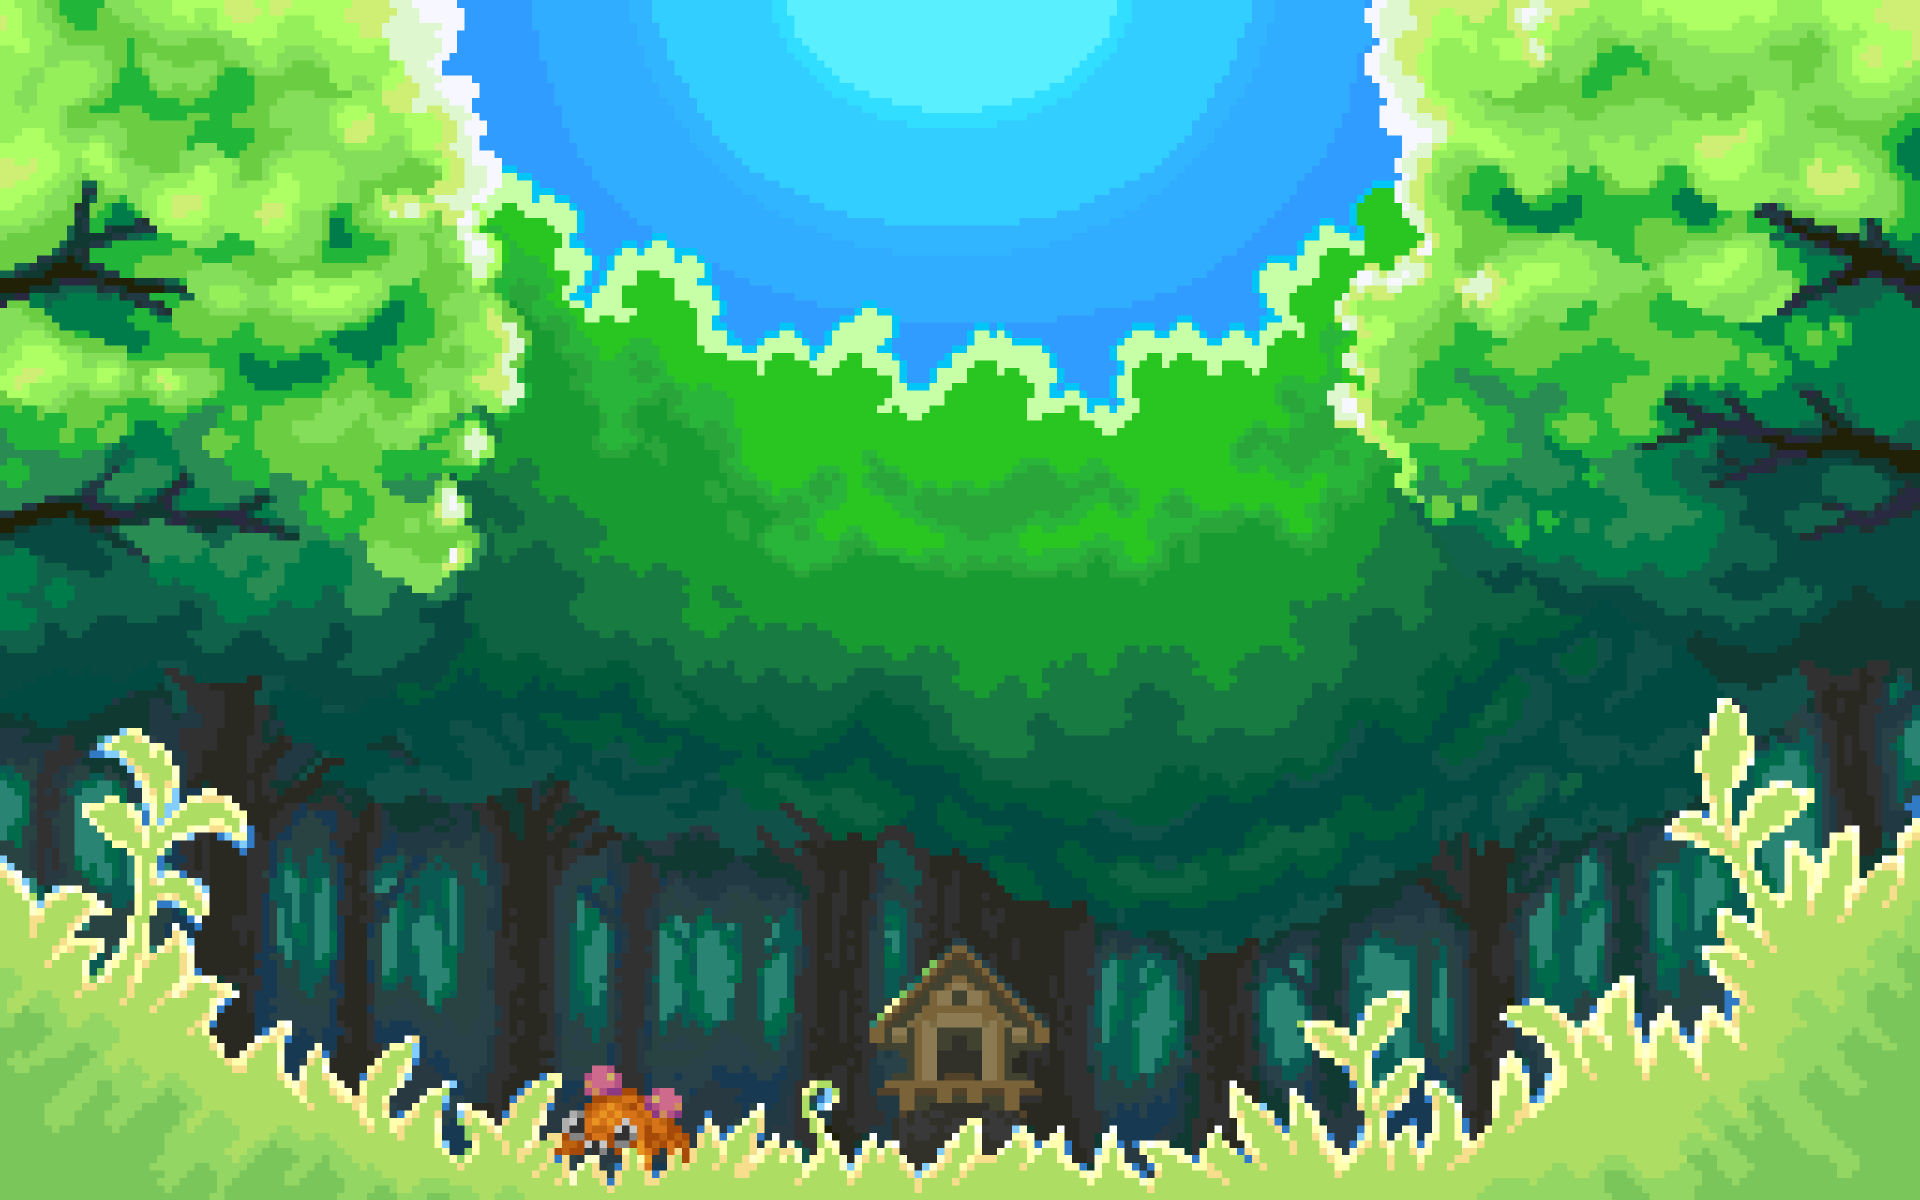 Pokémon Forest Wallpaper Free Pokémon Forest Background